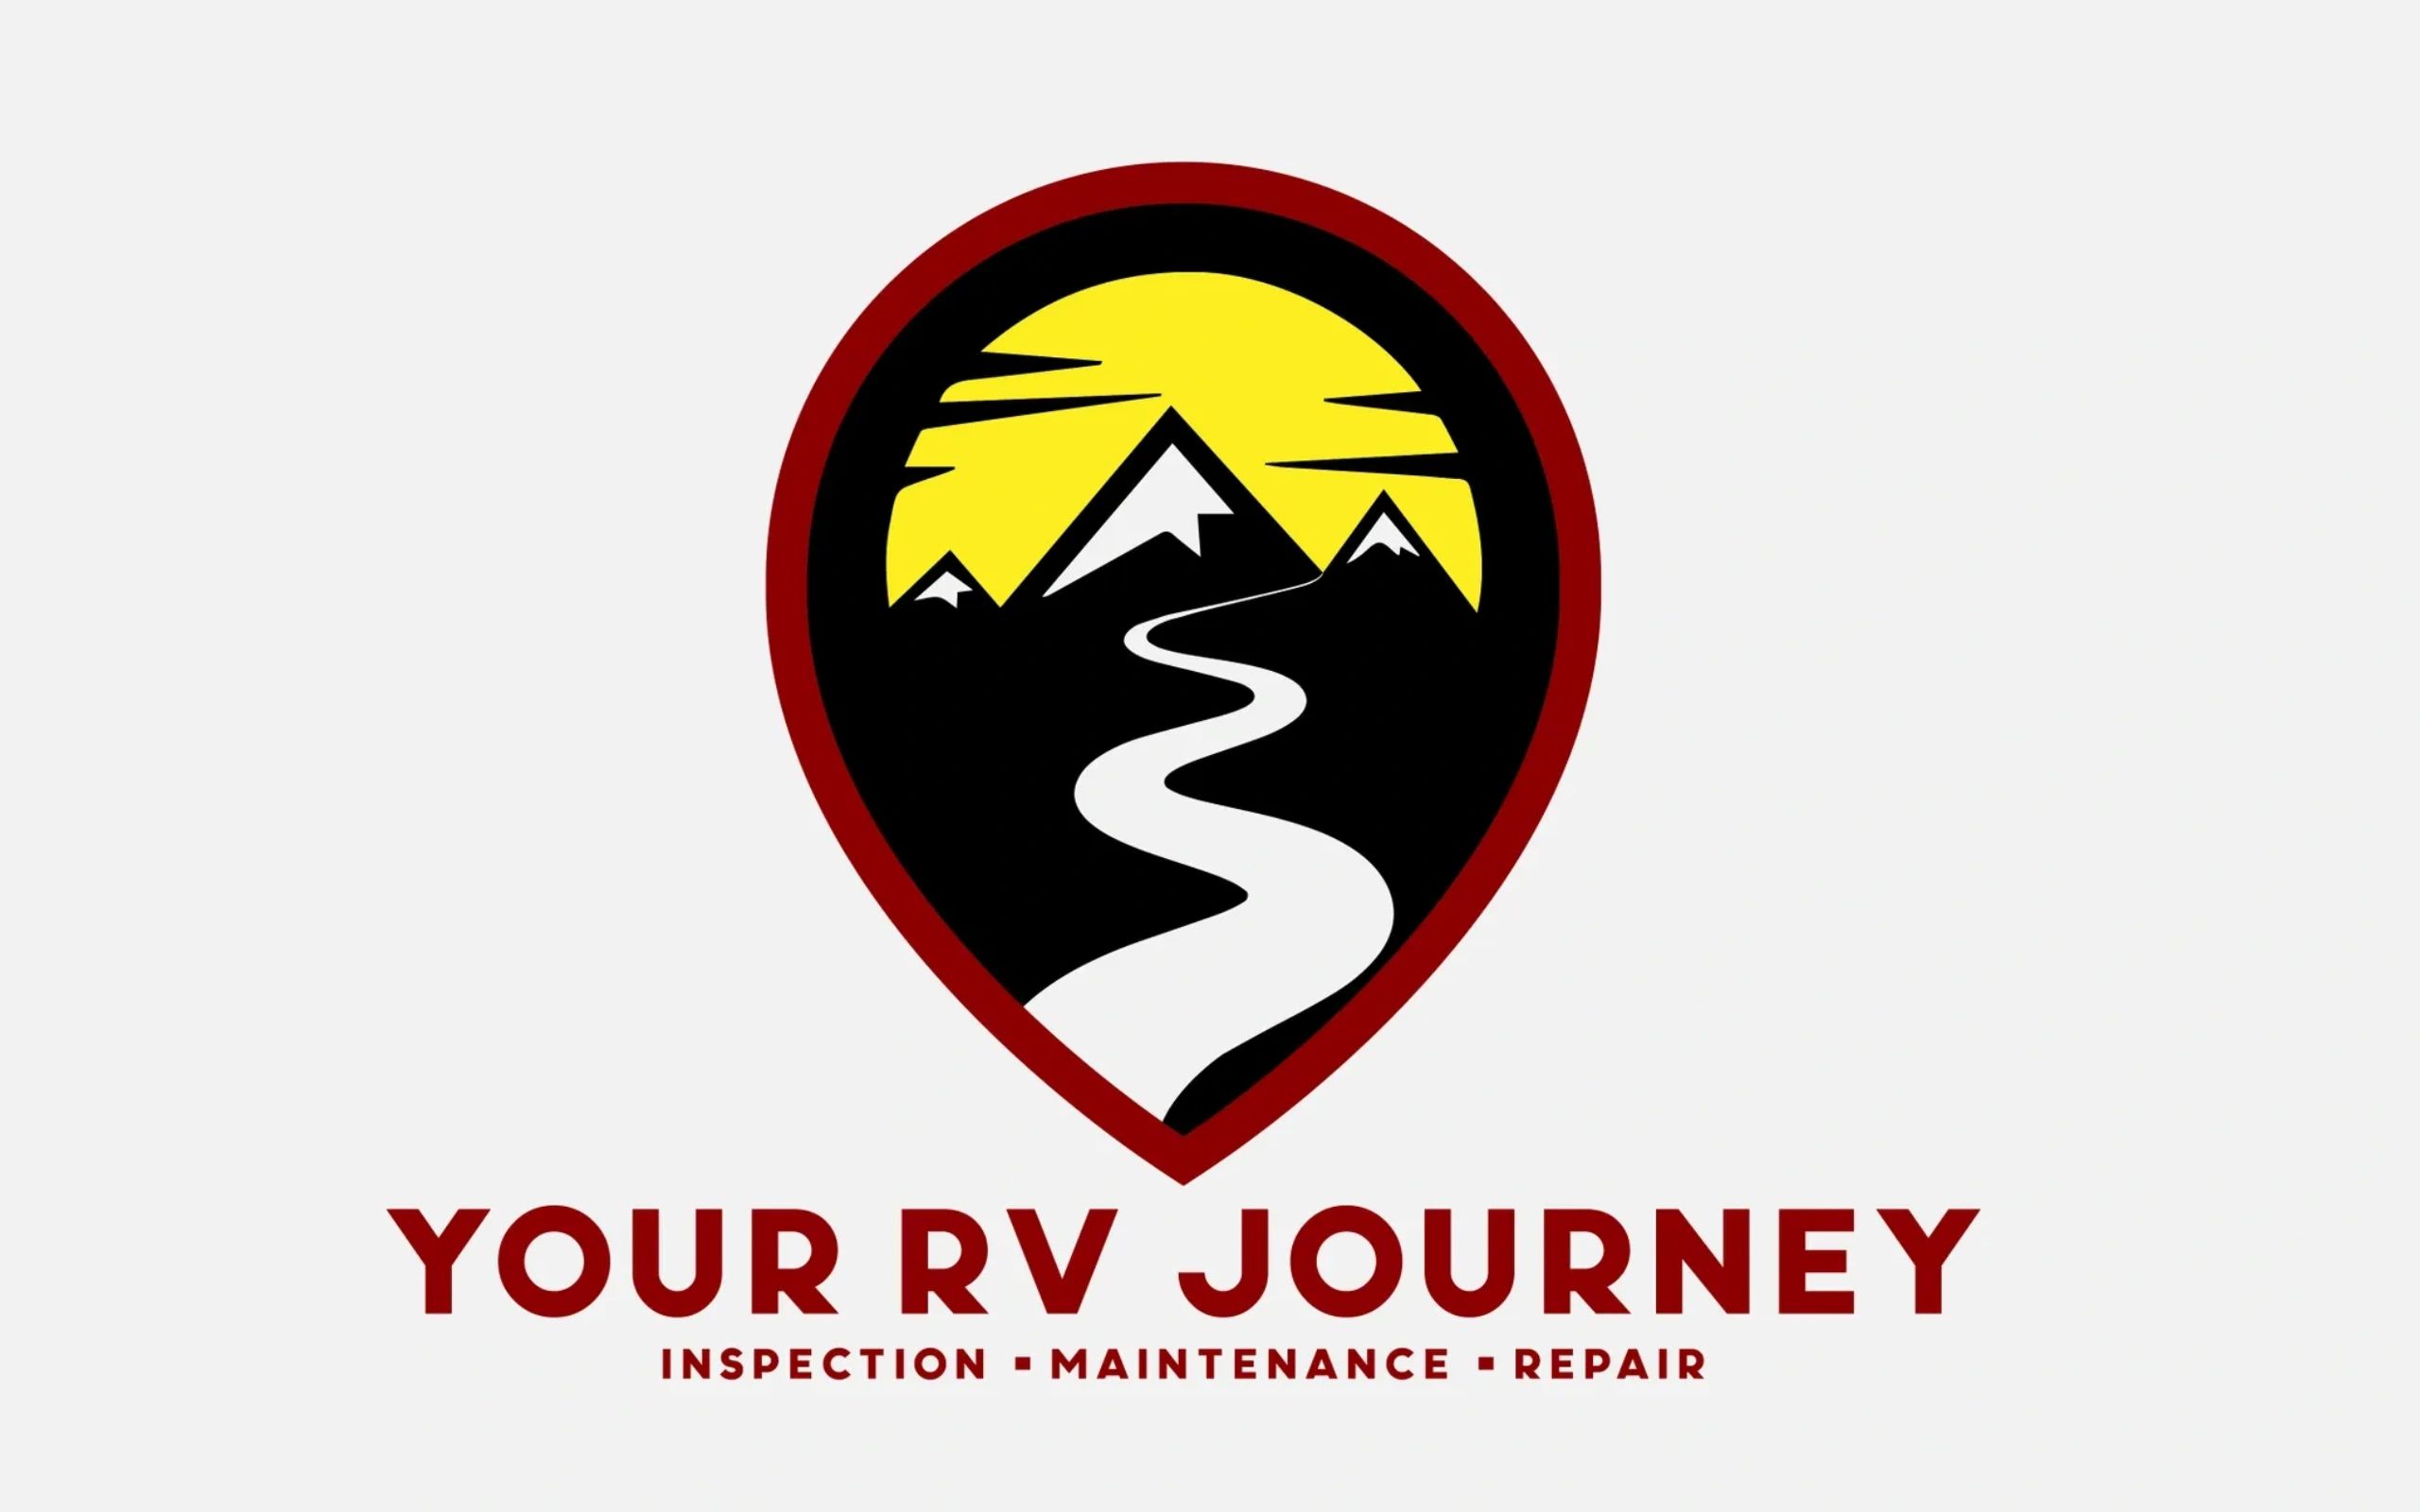 Your RV Journey Inspection Maintenance Repair 